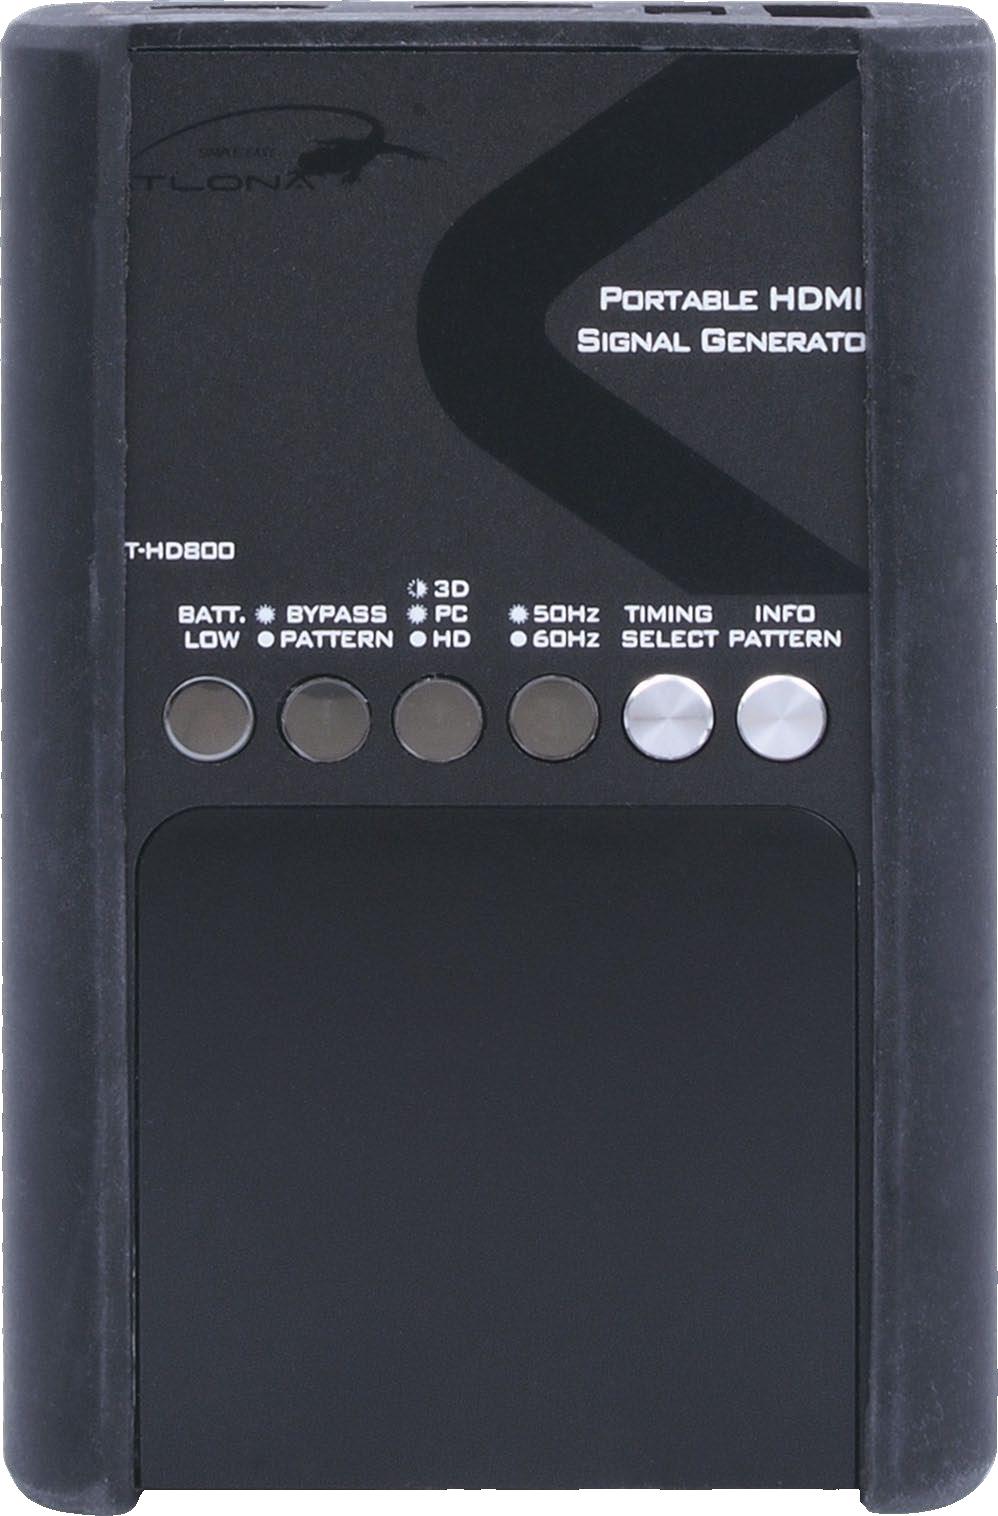 Atlona Portable HDMI Signal Generator